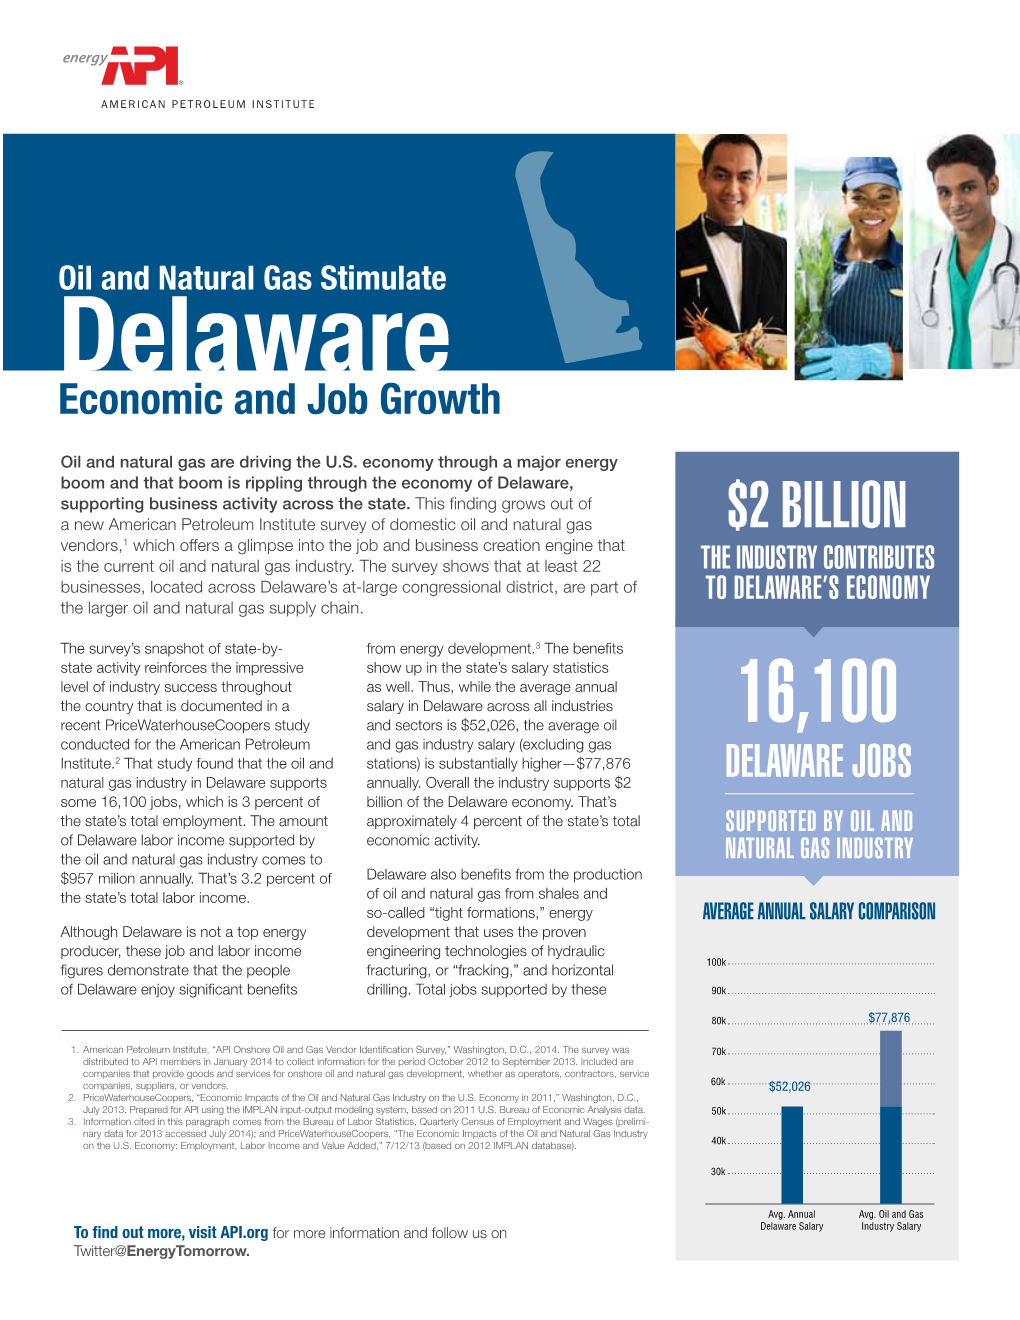 Delaware Economic and Job Growth